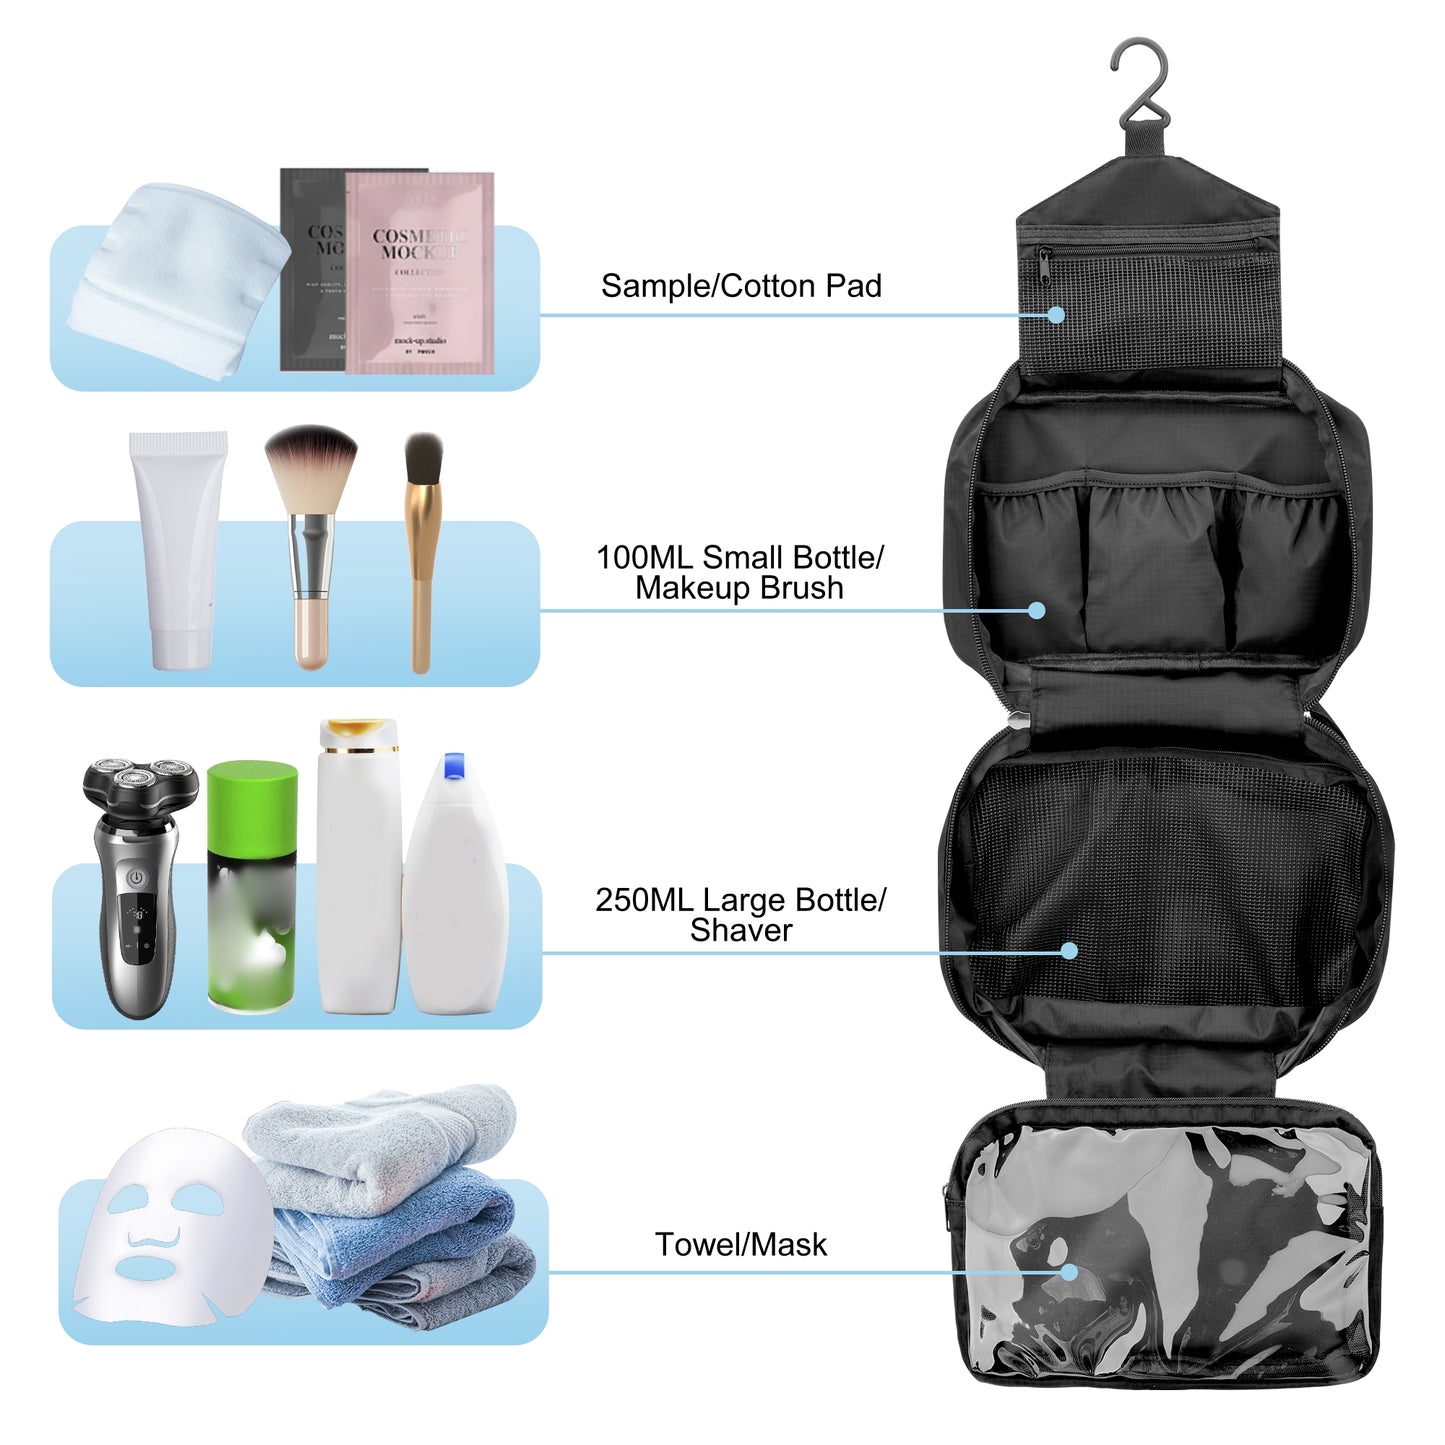 Travel Toiletry Bag for Women Men - Waterproof Toiletry Bag Organizer Makeup Bag Cosmetic Organizer Portable Case for Traveling Camping